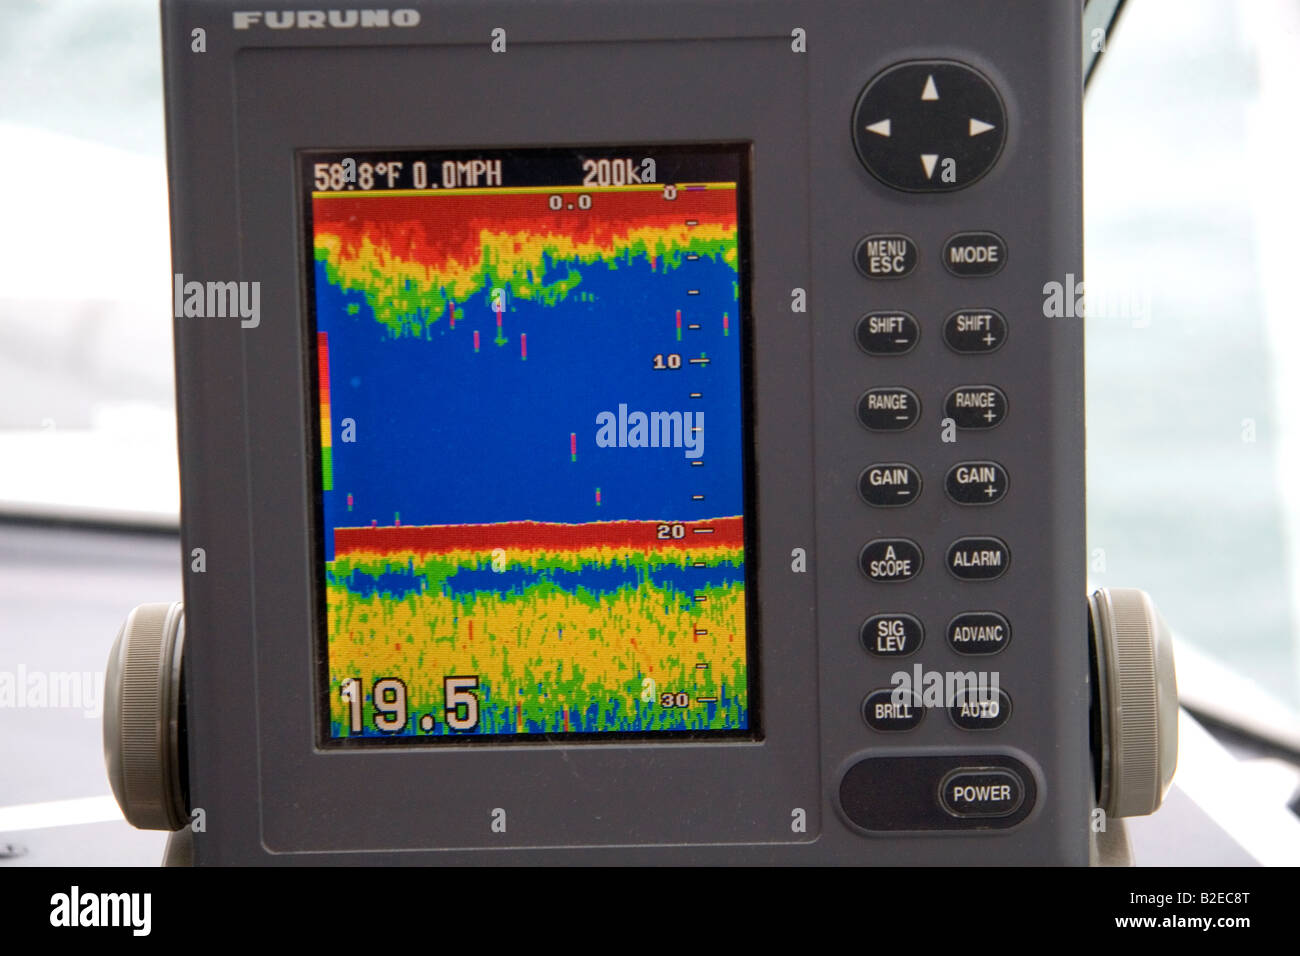 https://c8.alamy.com/comp/B2EC8T/the-screen-of-a-fishfinder-using-sonar-to-measure-water-depth-and-B2EC8T.jpg